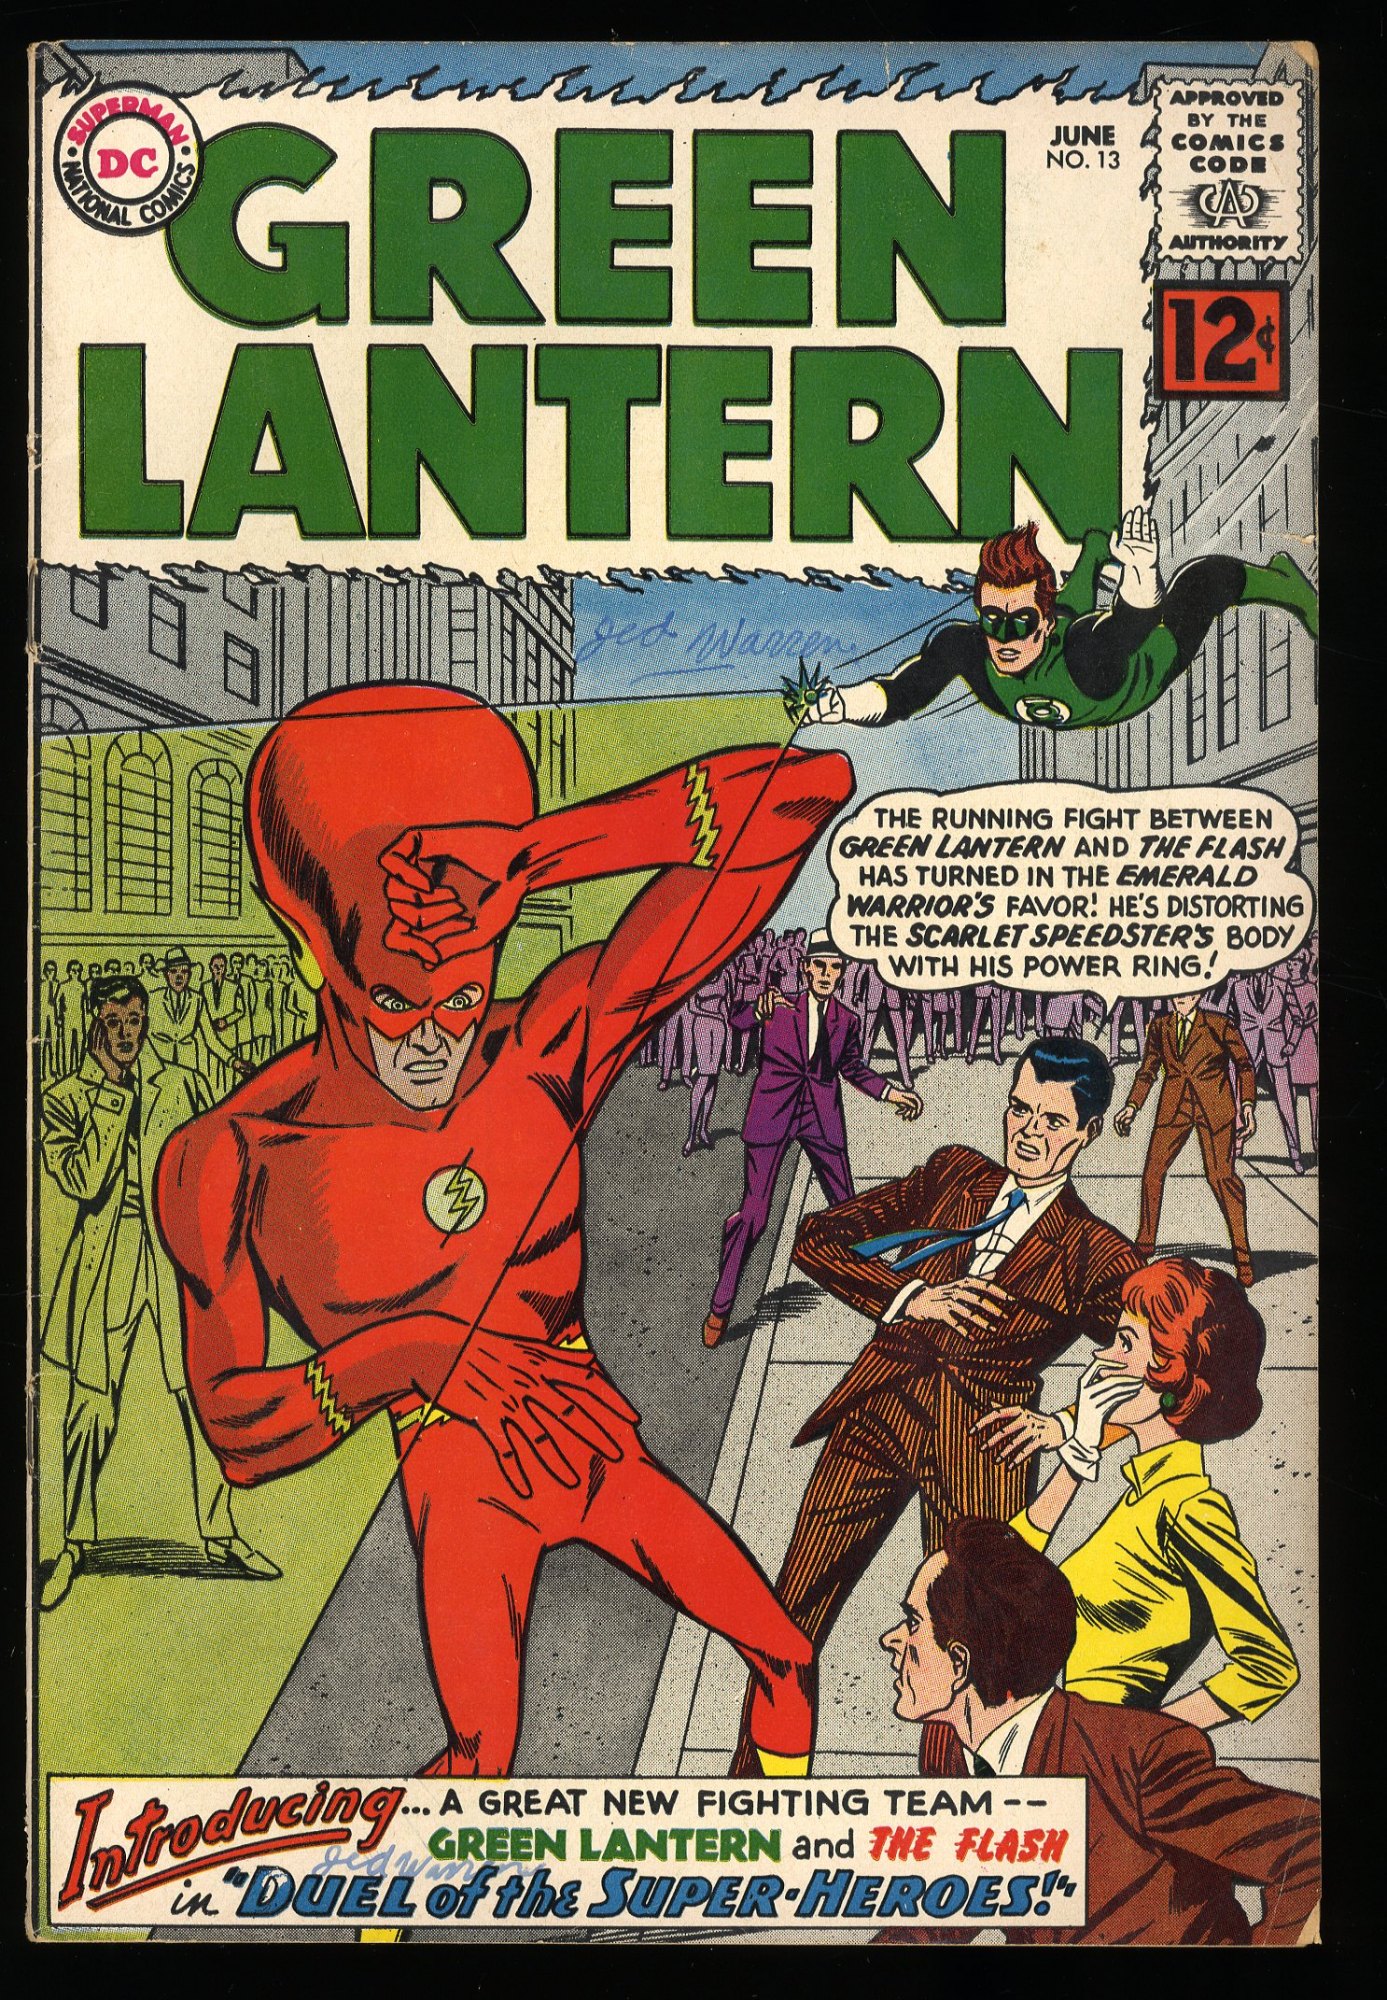 Image: Green Lantern #13 VG/FN 5.0 Flash! Gil Kane/Joe Giella Cover!